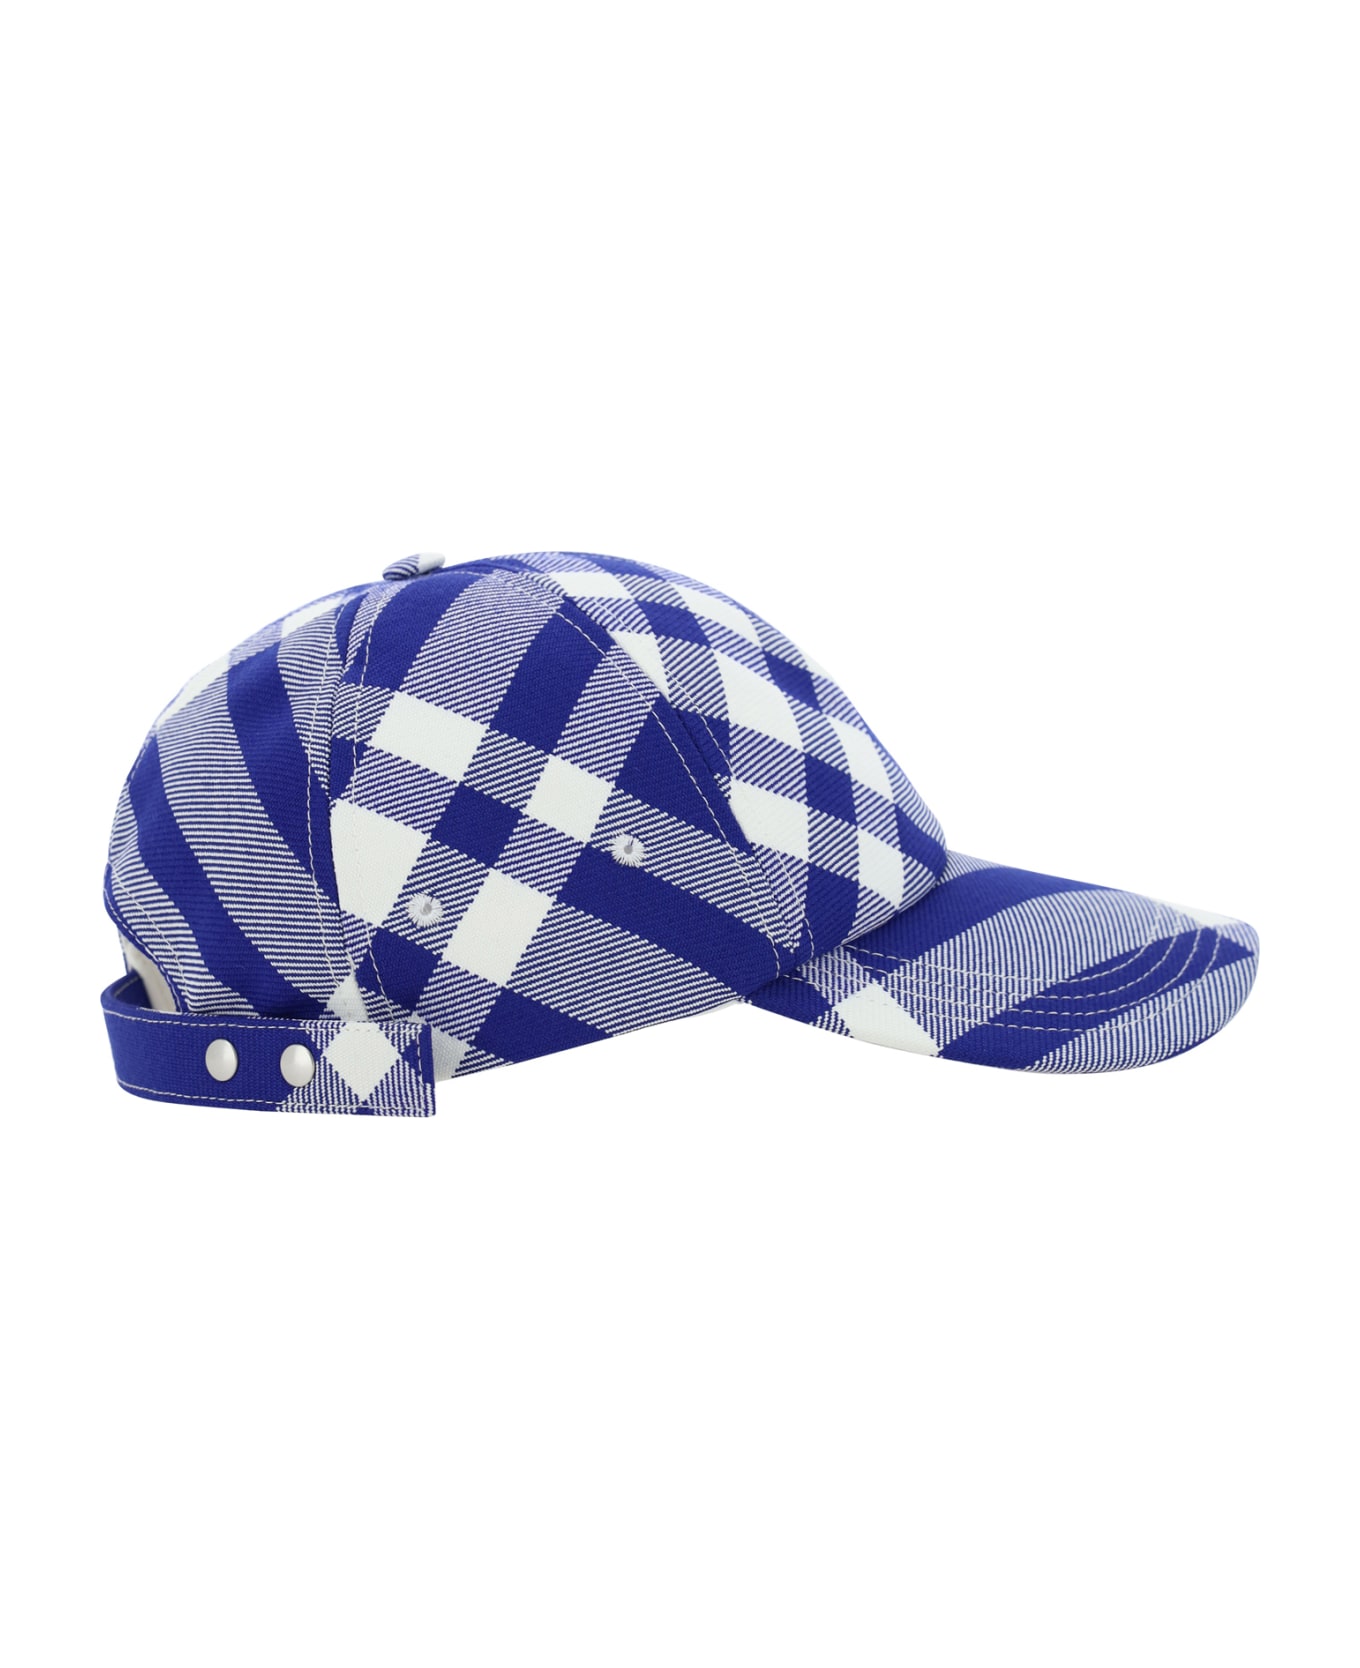 Burberry Baseball Cap - Knight Ip Check 帽子